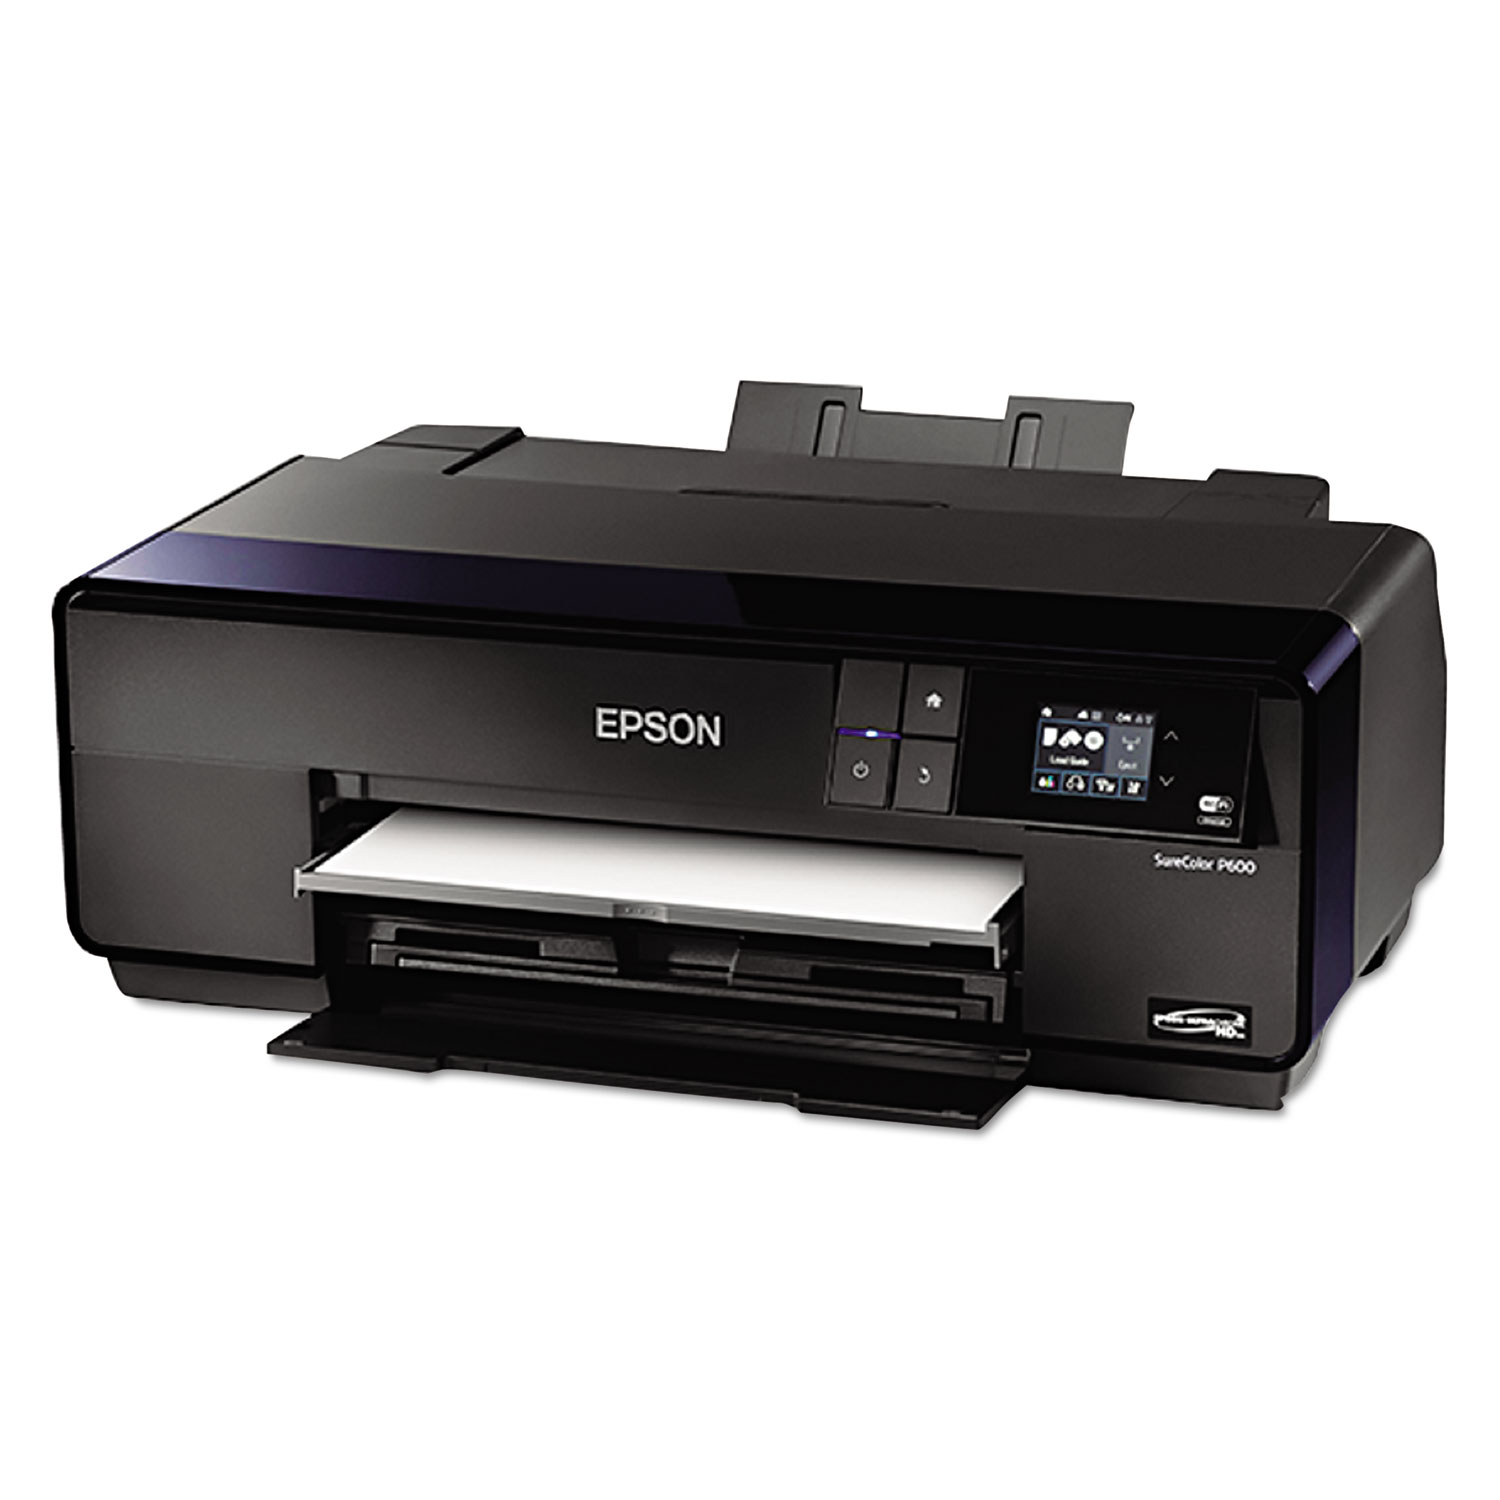  Epson C11CE21201 SureColor P600 Wireless 13 Wide Format Inkjet Printer (EPSC11CE21201) 